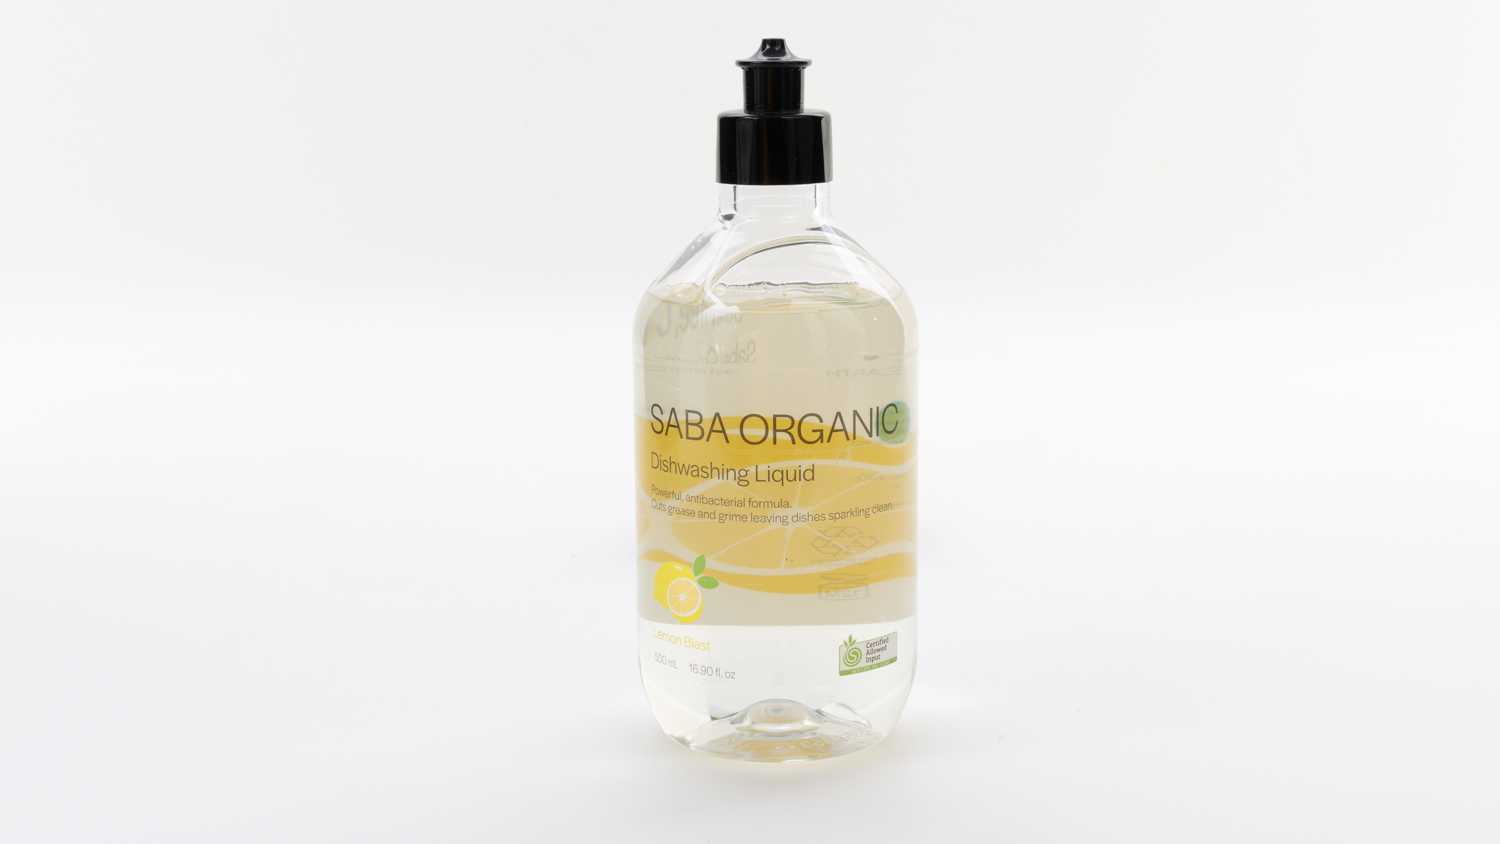 Saba Organic Dishwashing Liquid carousel image